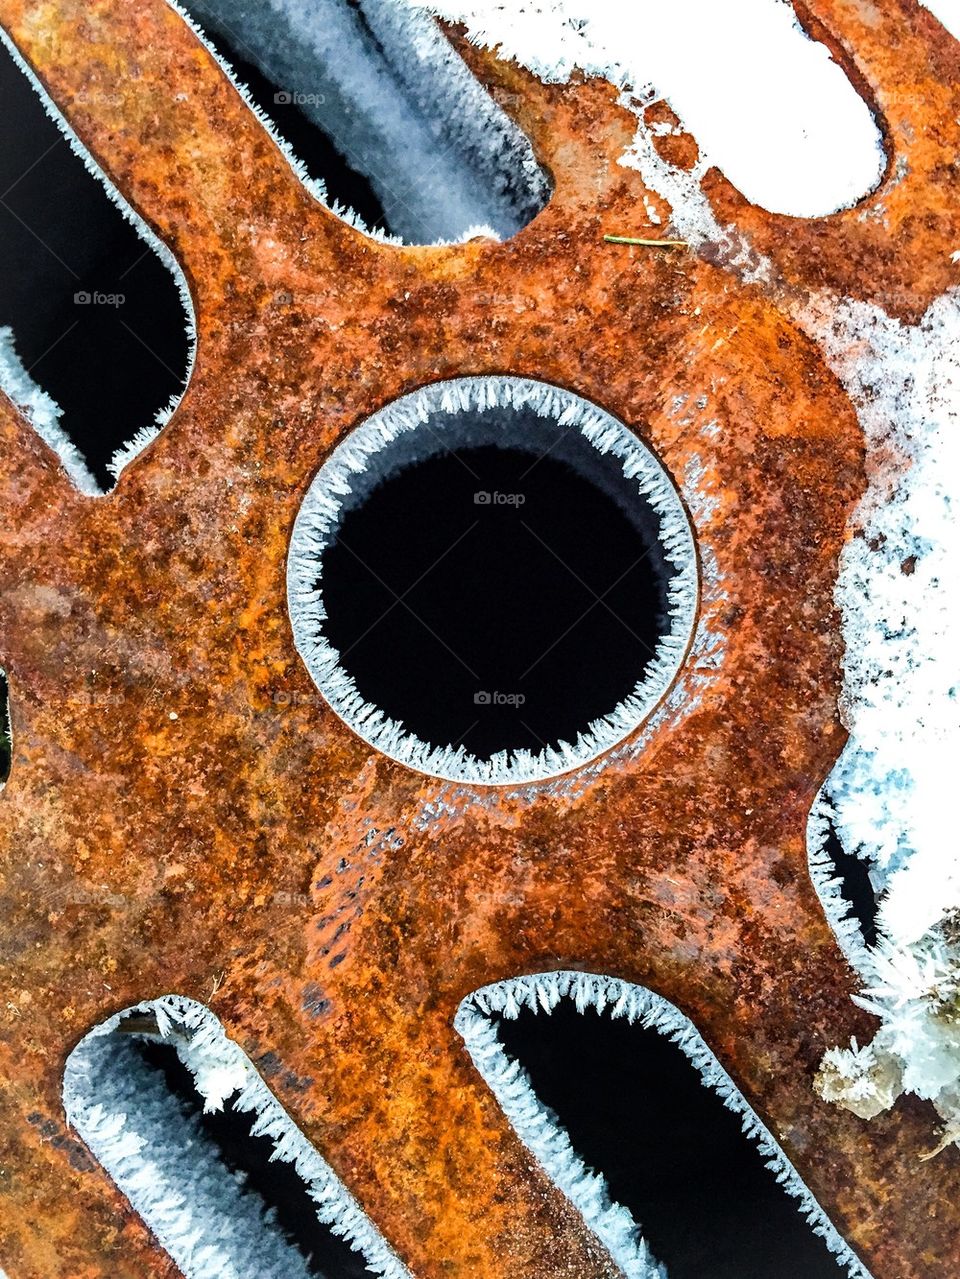 Frosty Sewer